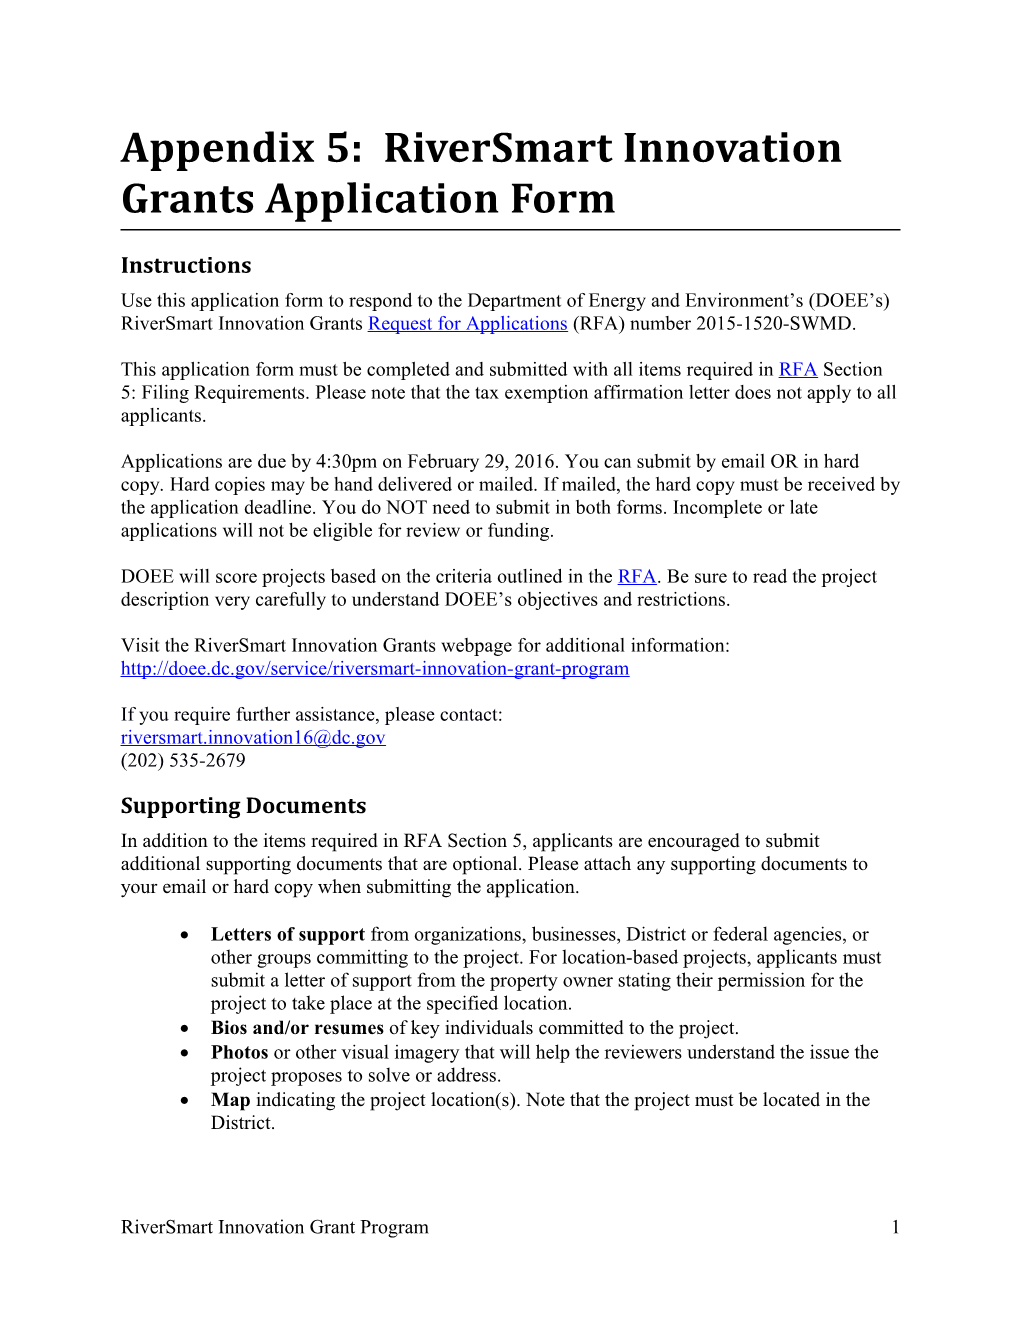 Appendix 5: Riversmart Innovation Grantsapplication Form